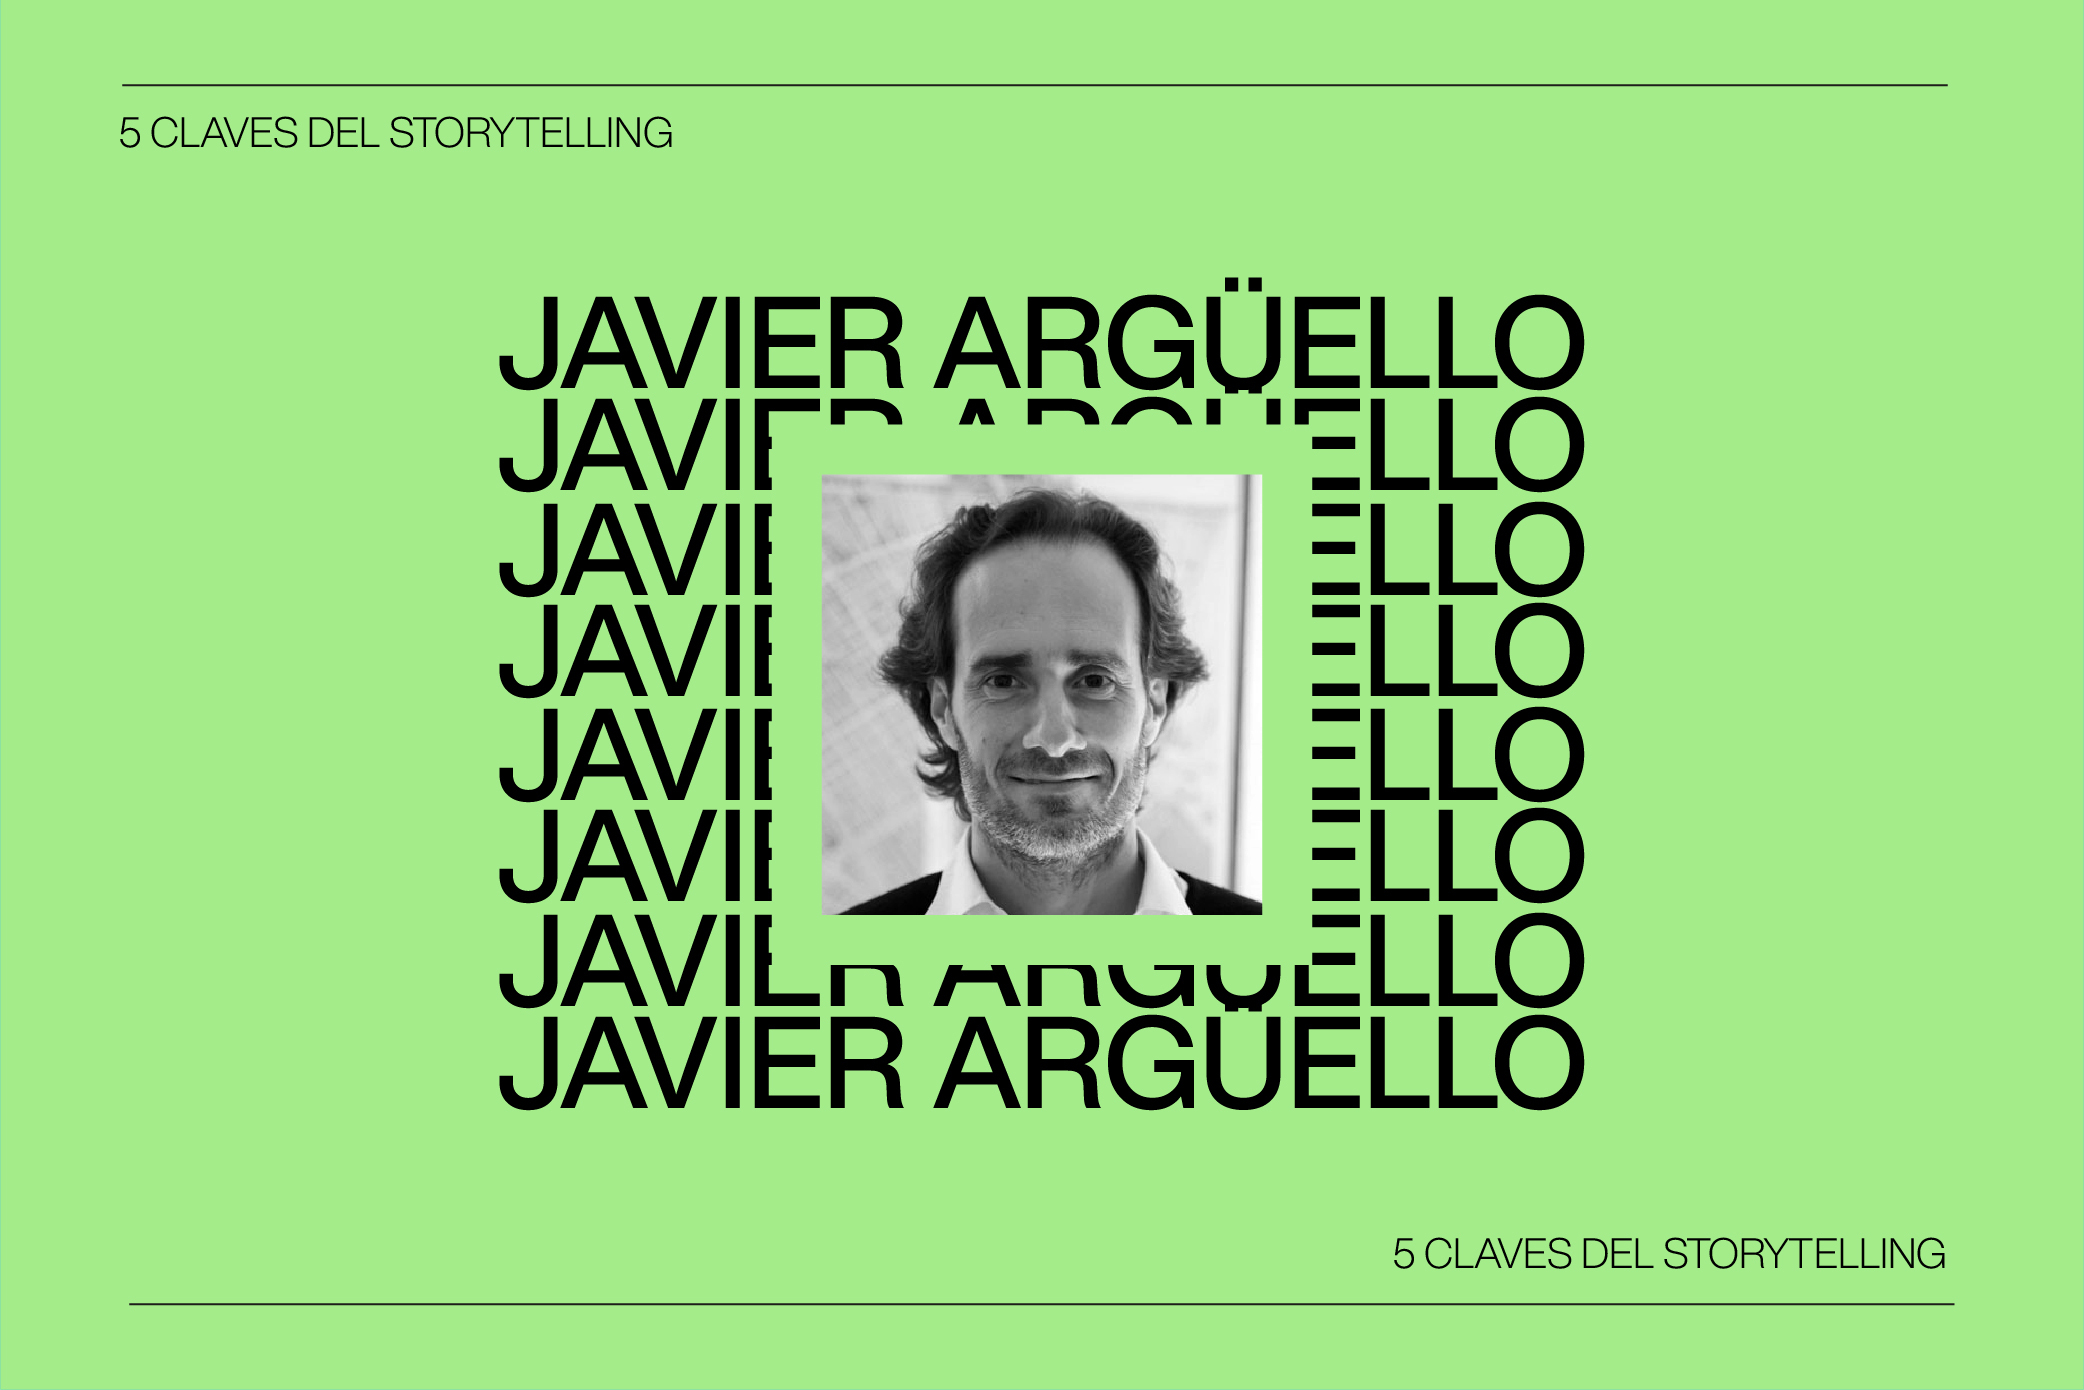 Las 5 Claves del Storytelling según Javier Argüello